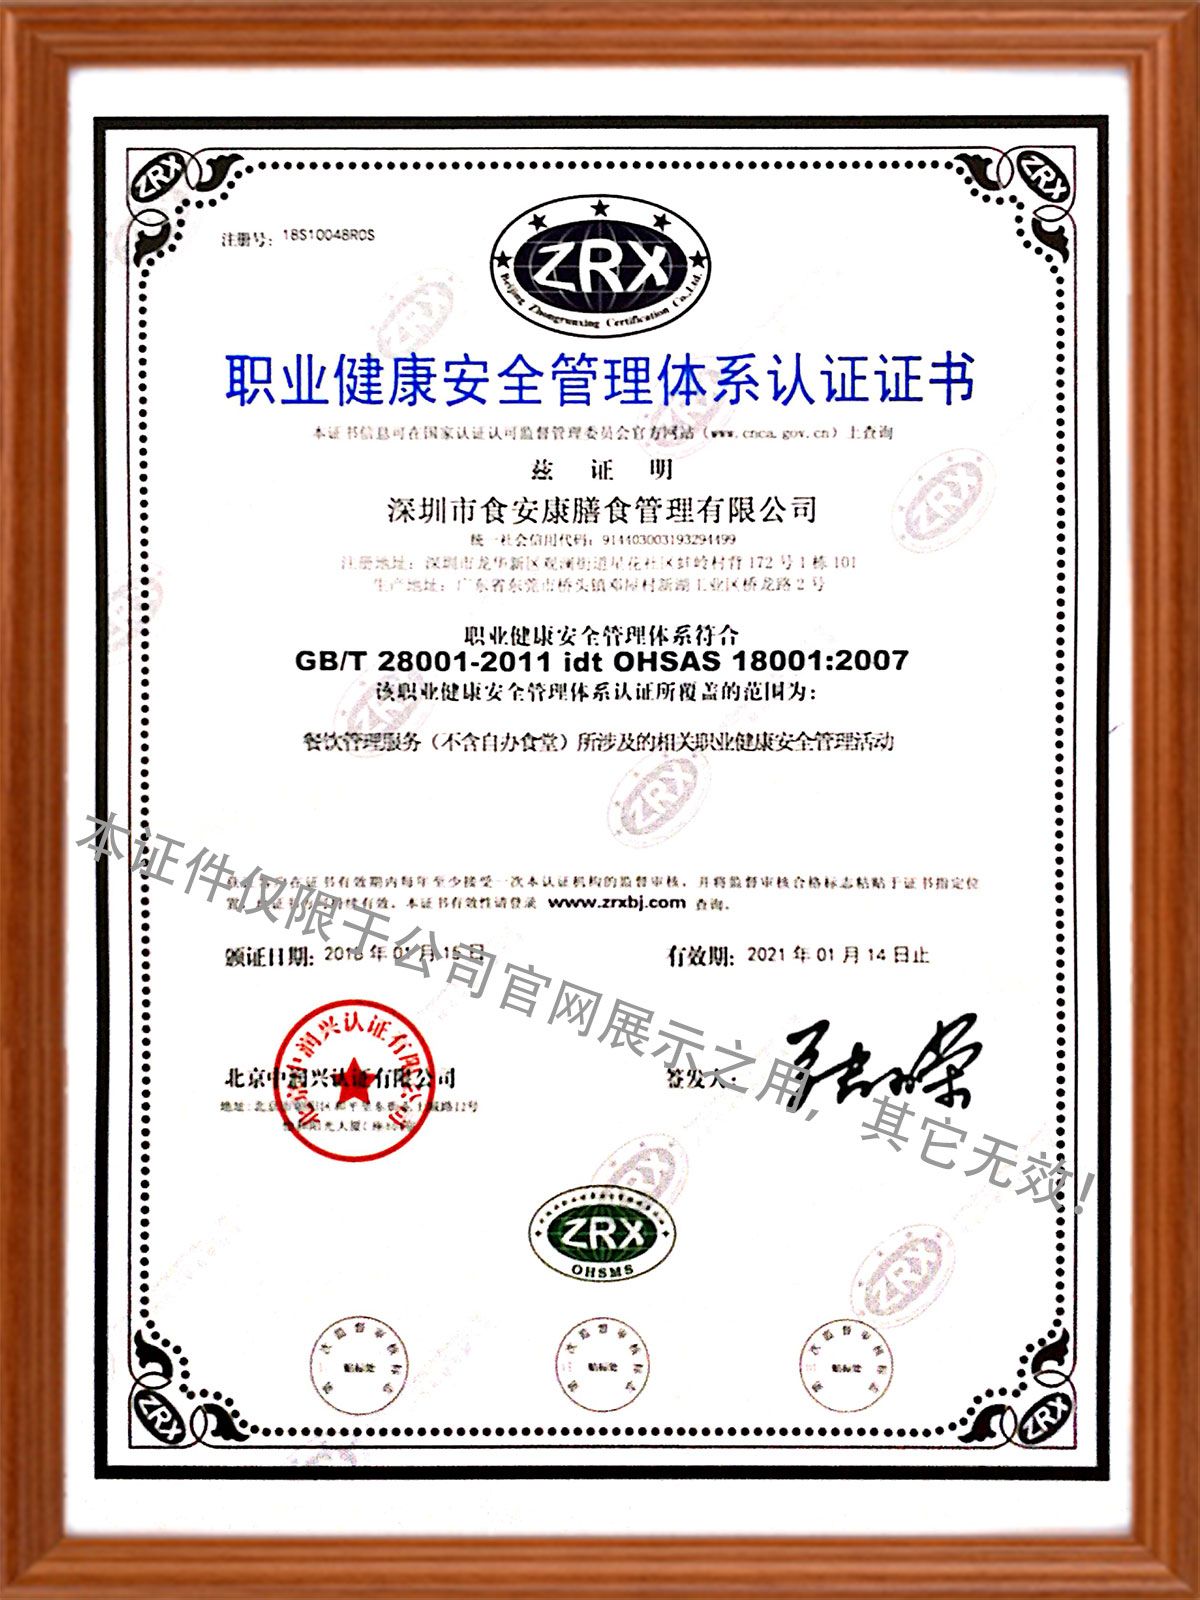 ISO18001:2007 职业健康安全管理体系认证证书